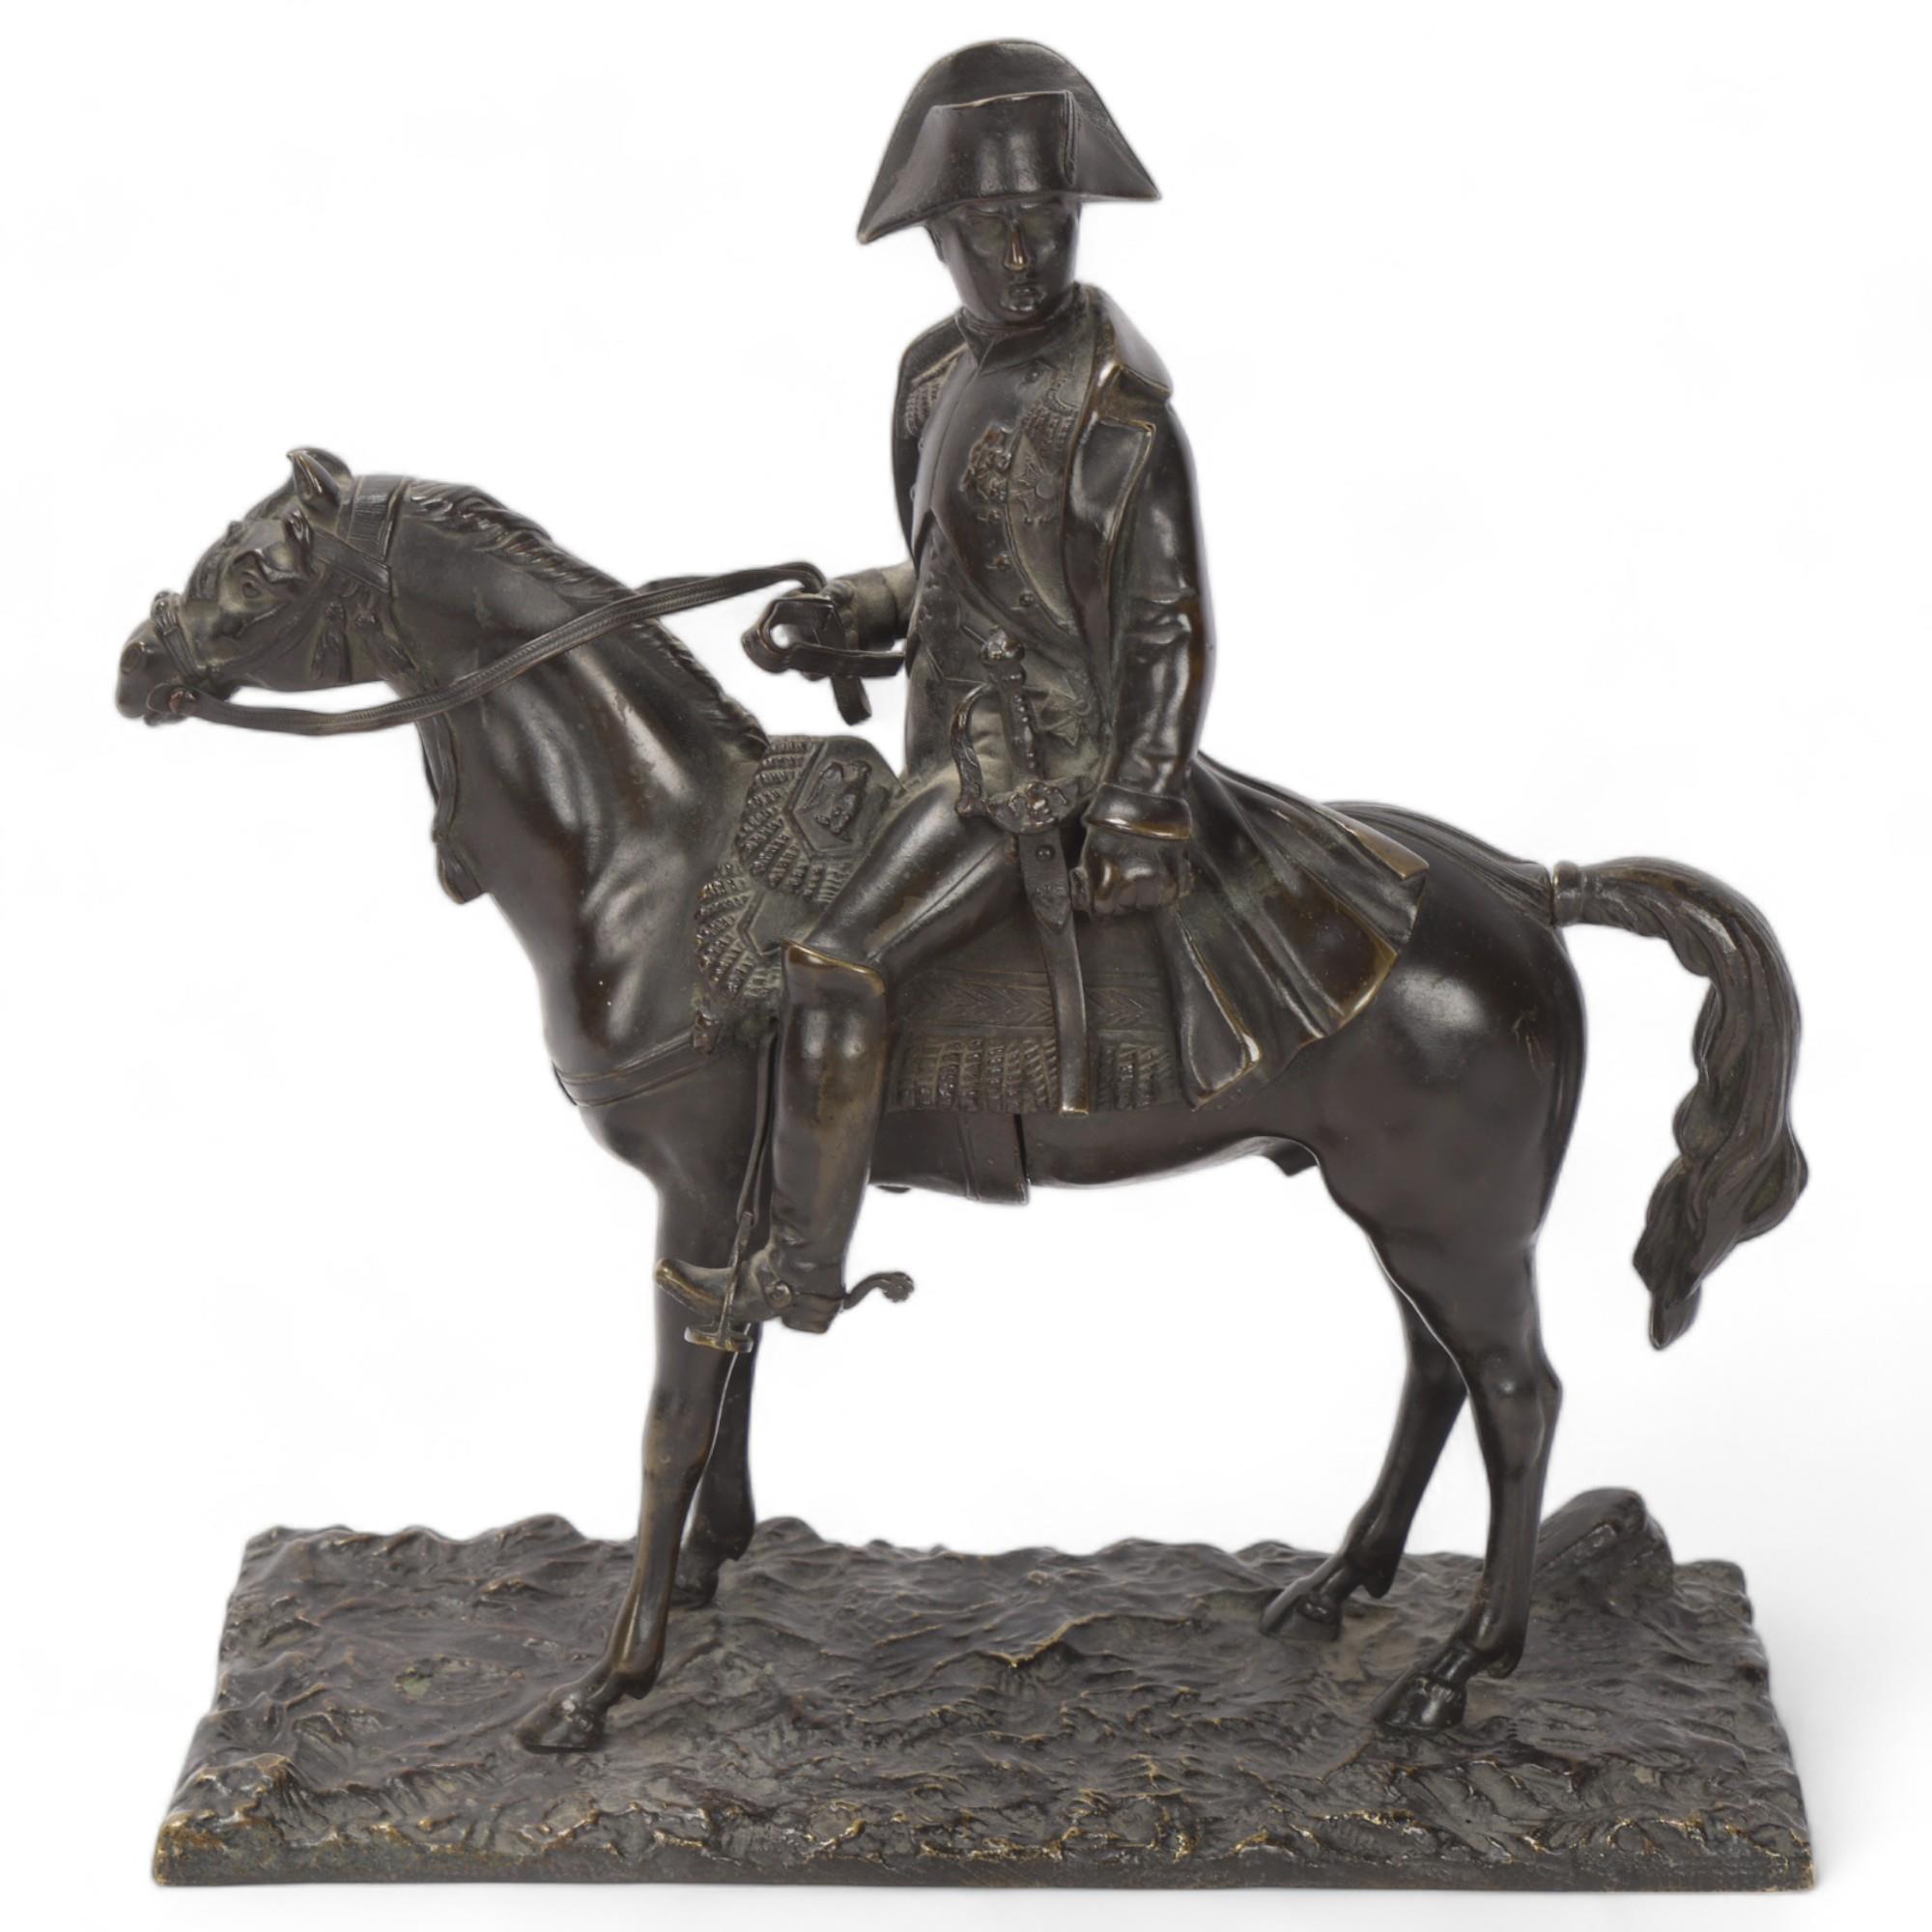 Napoleon Bonaparte on horseback, 19th century bronze sculpture, unsigned, height 24cm, base length